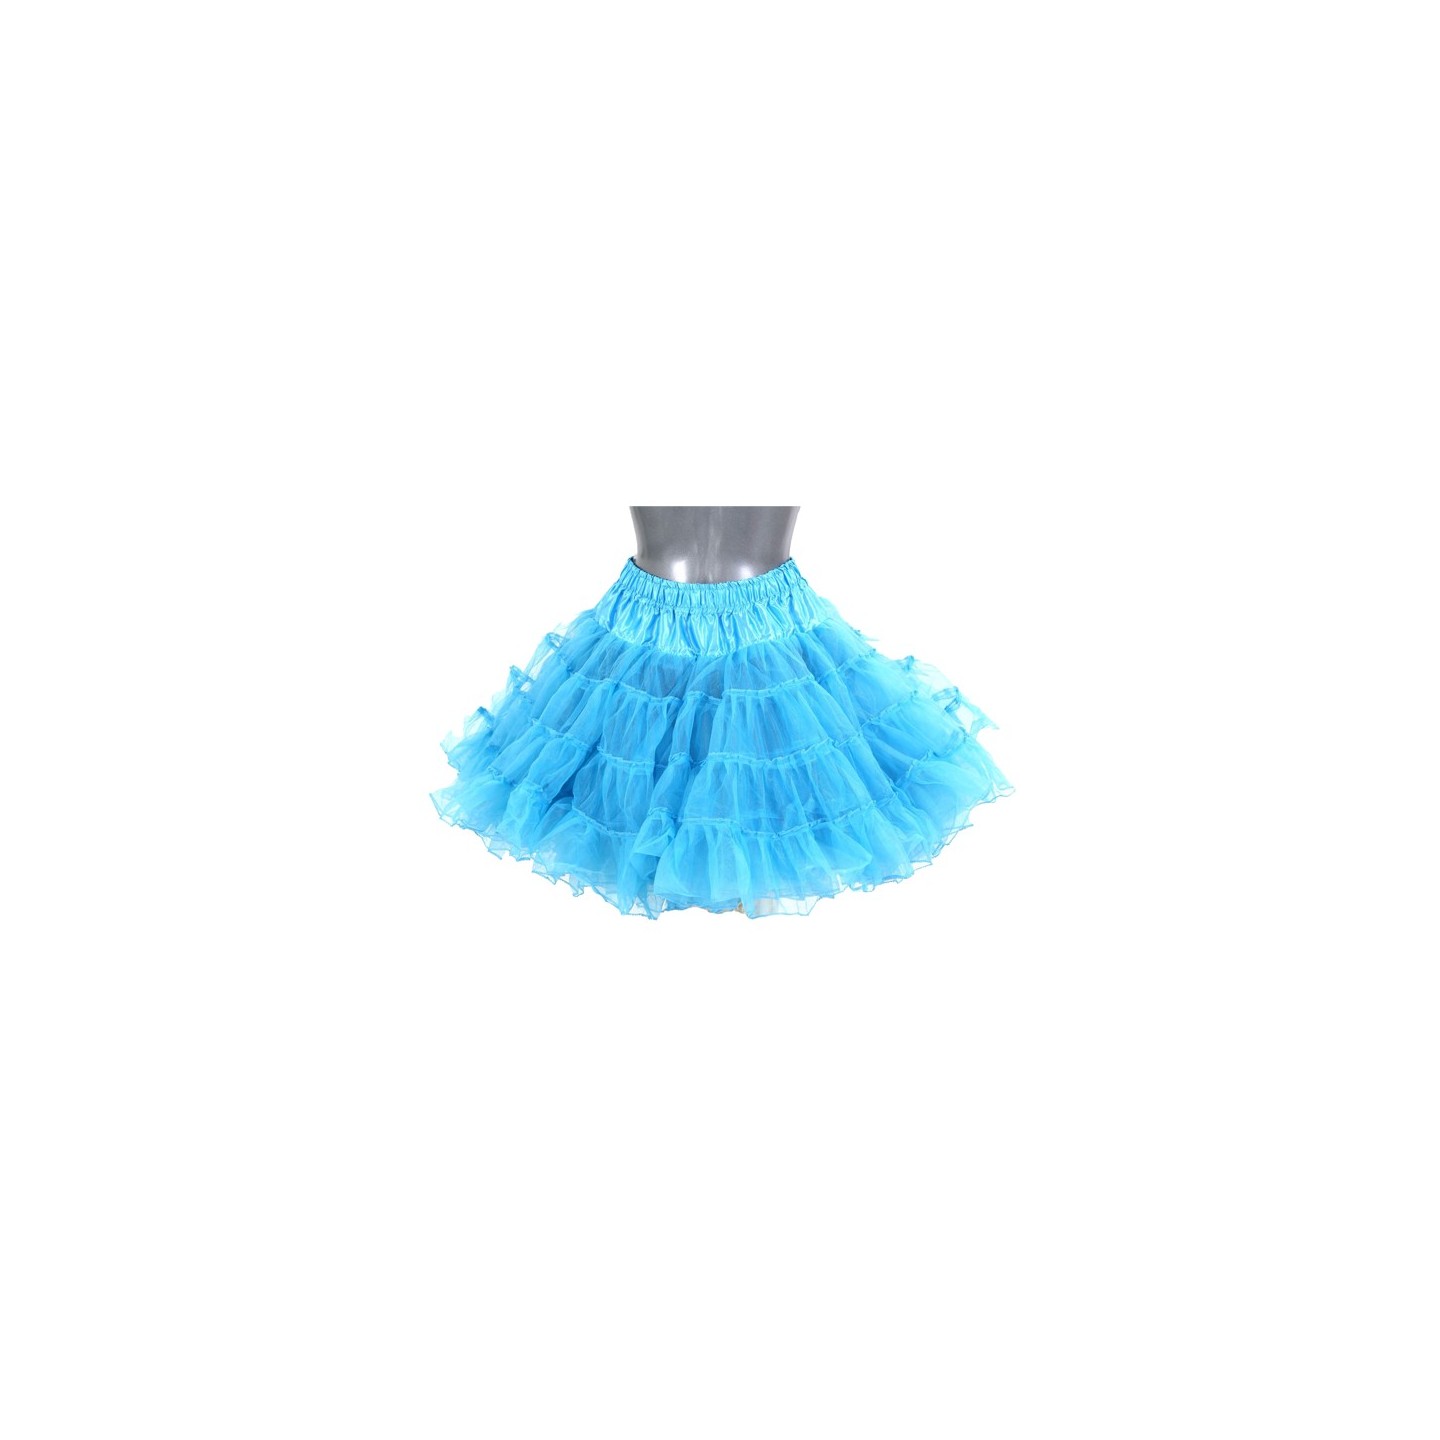 vlam Citroen premie Turquoise petticoat rokje kopen ? | Jokershop.be - Carnavalswinkel